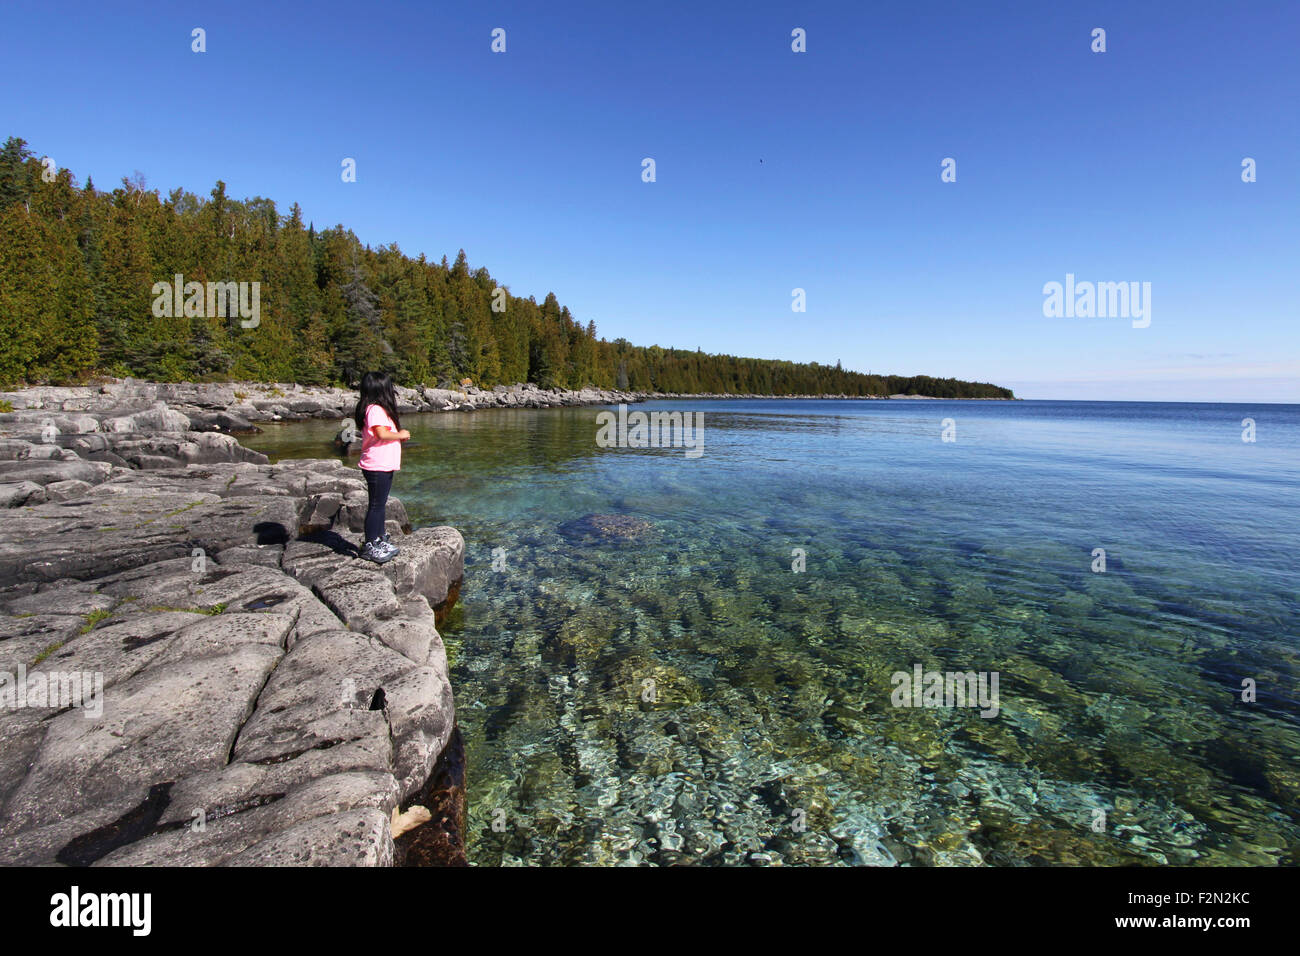 Young girl standing on rocky shore of Georgian Bay, Bruce Peninsula, Ontario, Canada. Stock Photo